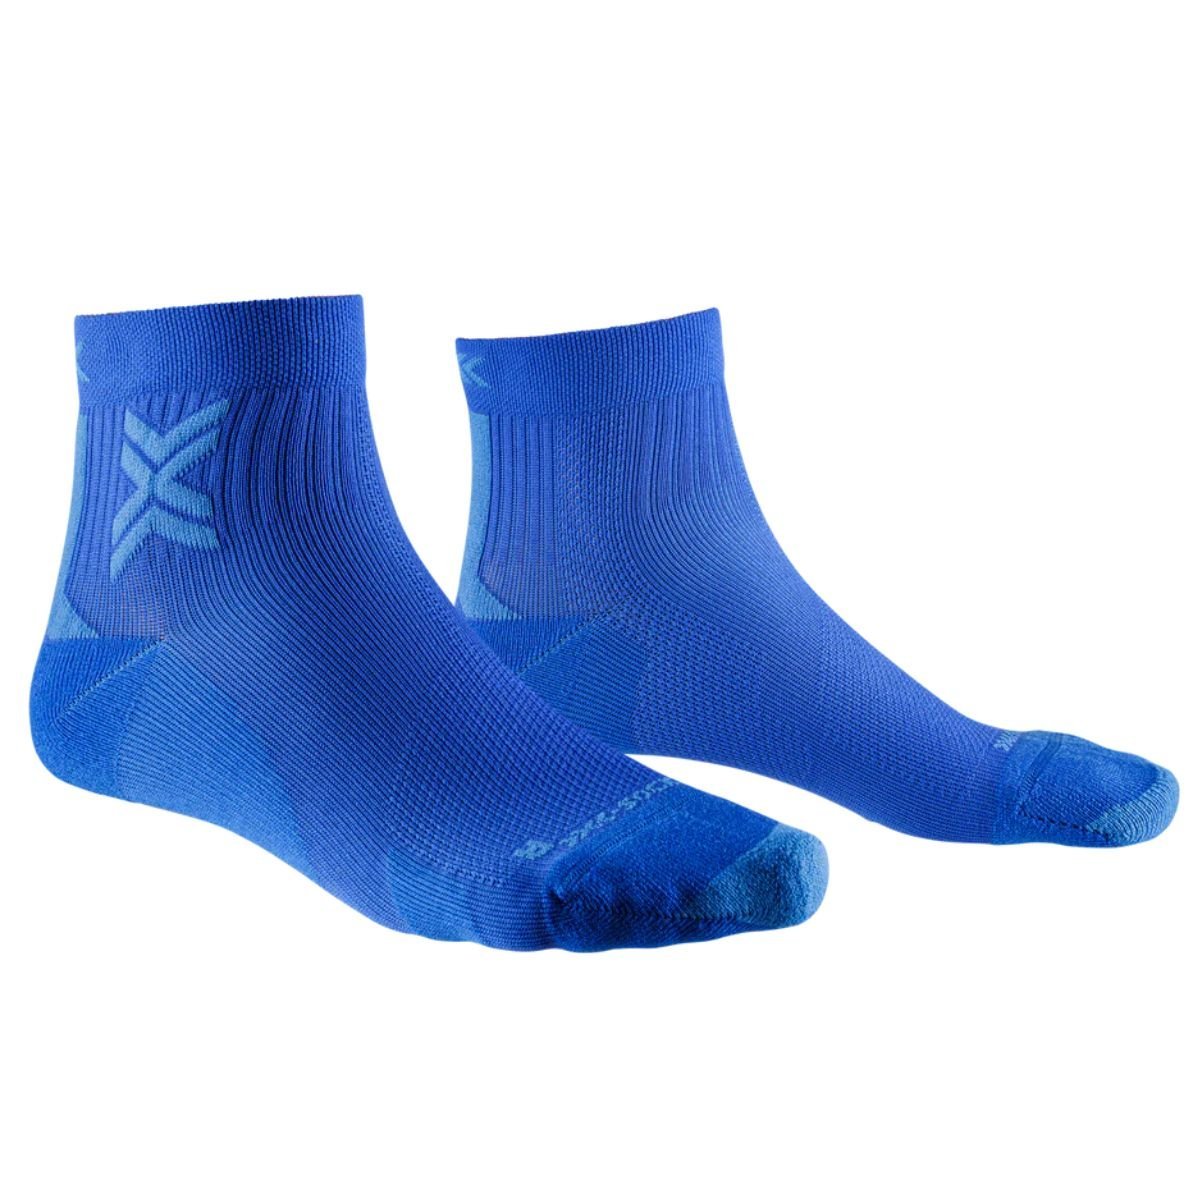 X-Bionic Run Discover členkové ponožky - modré